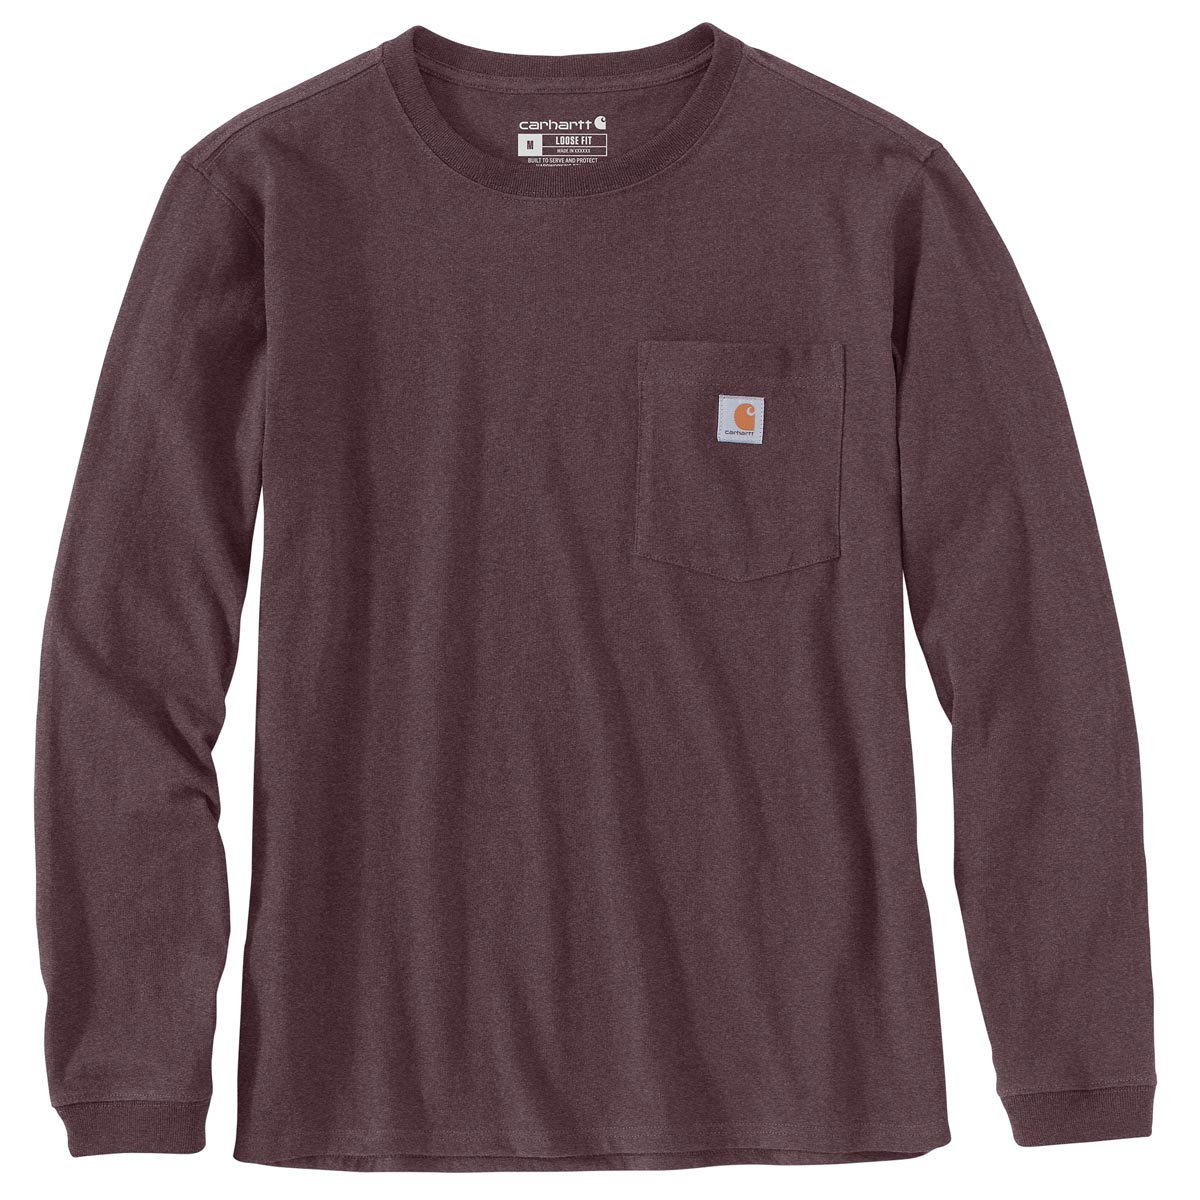 Carhartt Women's WK126 Workwear Pocket Long Sleeve T-Shirt - Discontinued Pricing